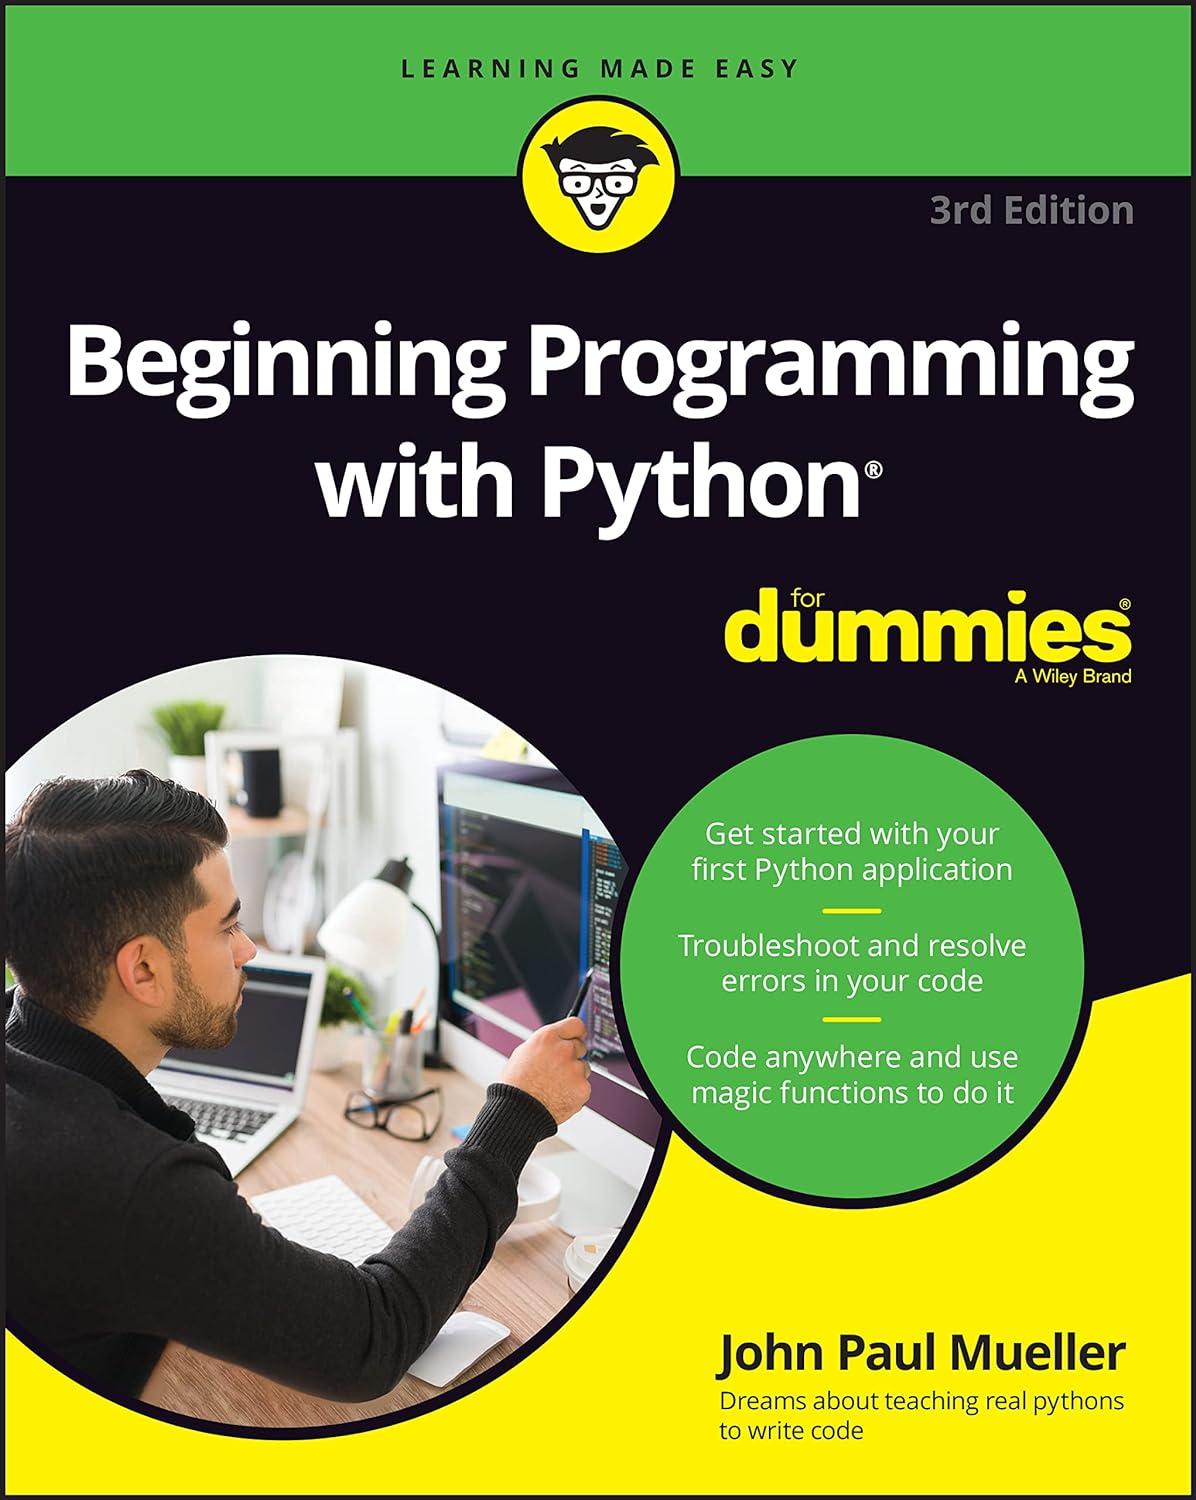 beginning programming with python for dummies 3rd edition john paul mueller 1119913772, 978-1119913771